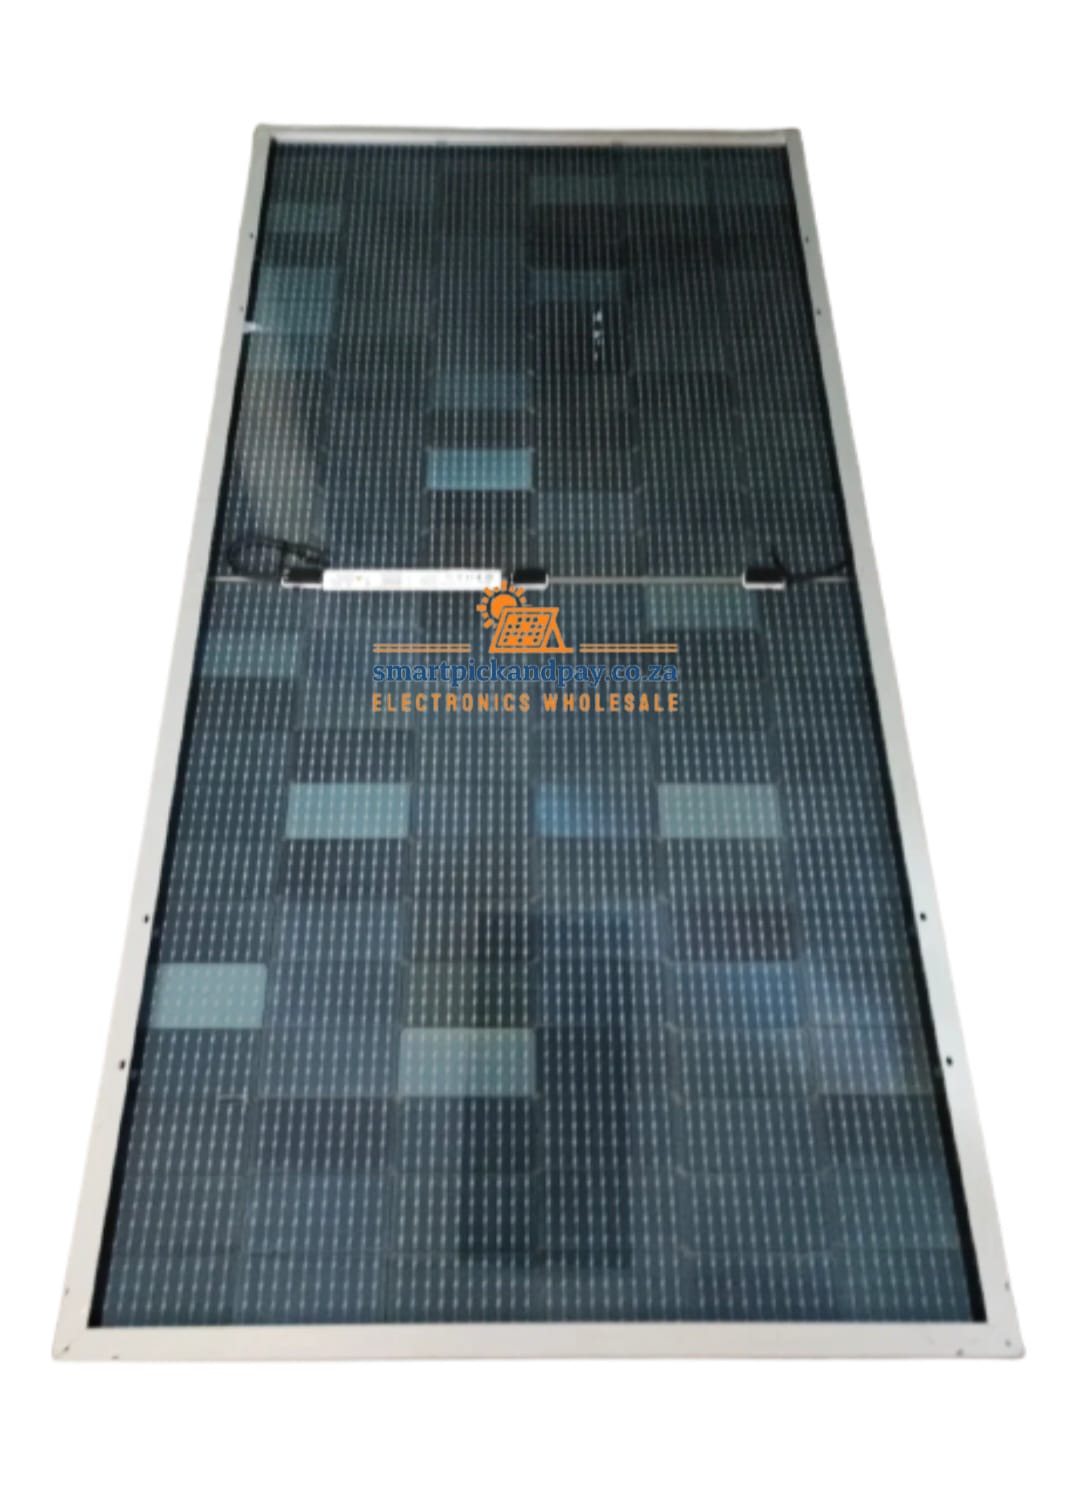 650W Mono Double Glass Bifacial Solar Panel Five Star